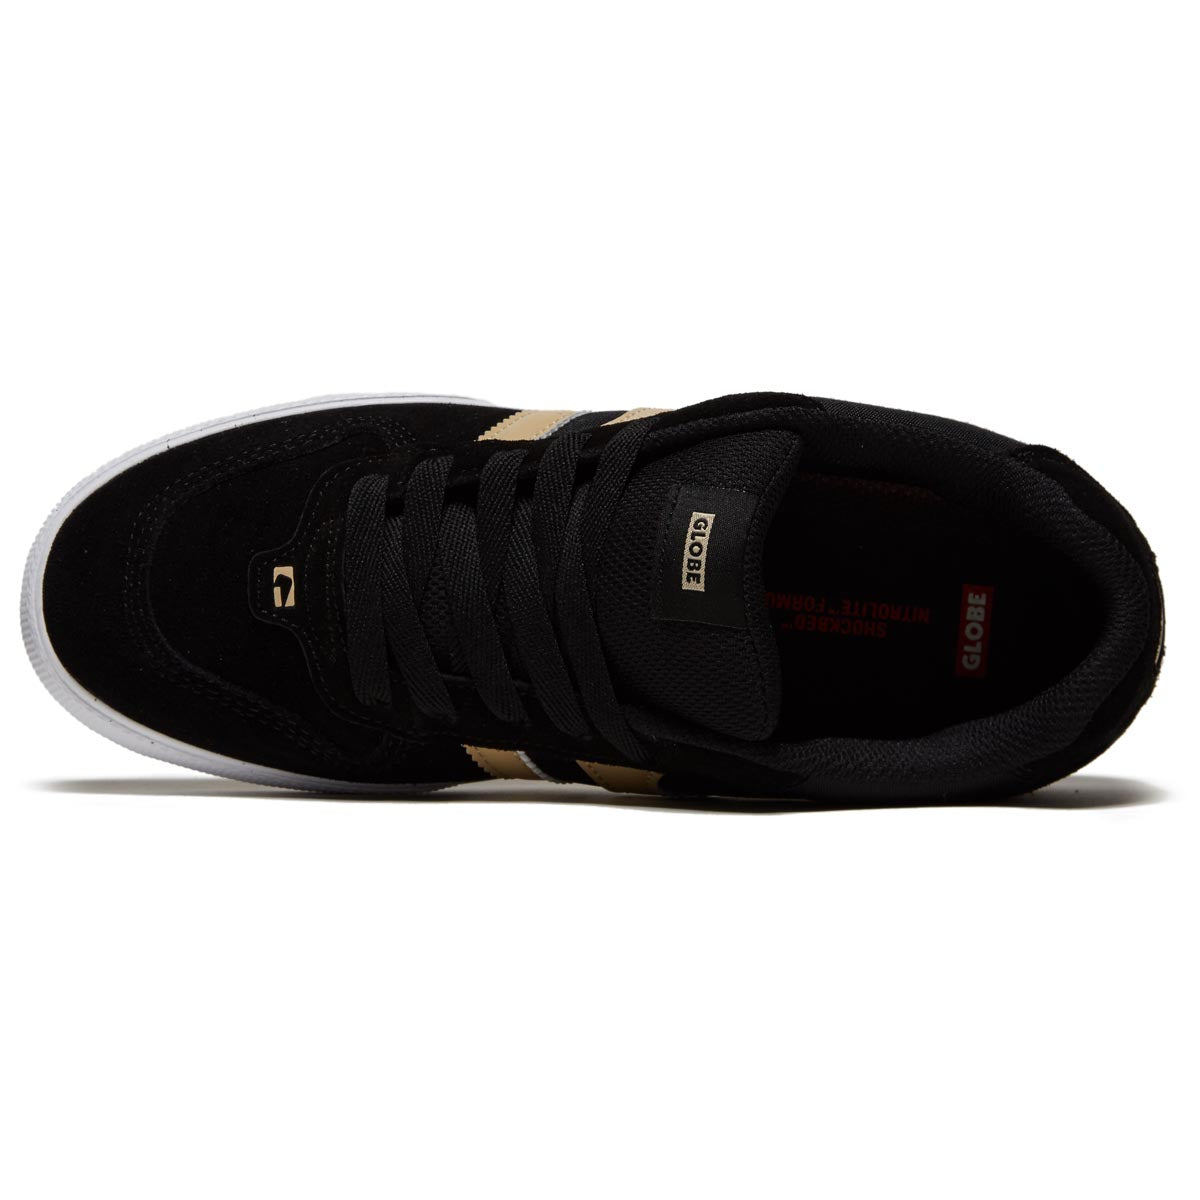 Globe Encore 2 Shoes - Black/Sand image 3